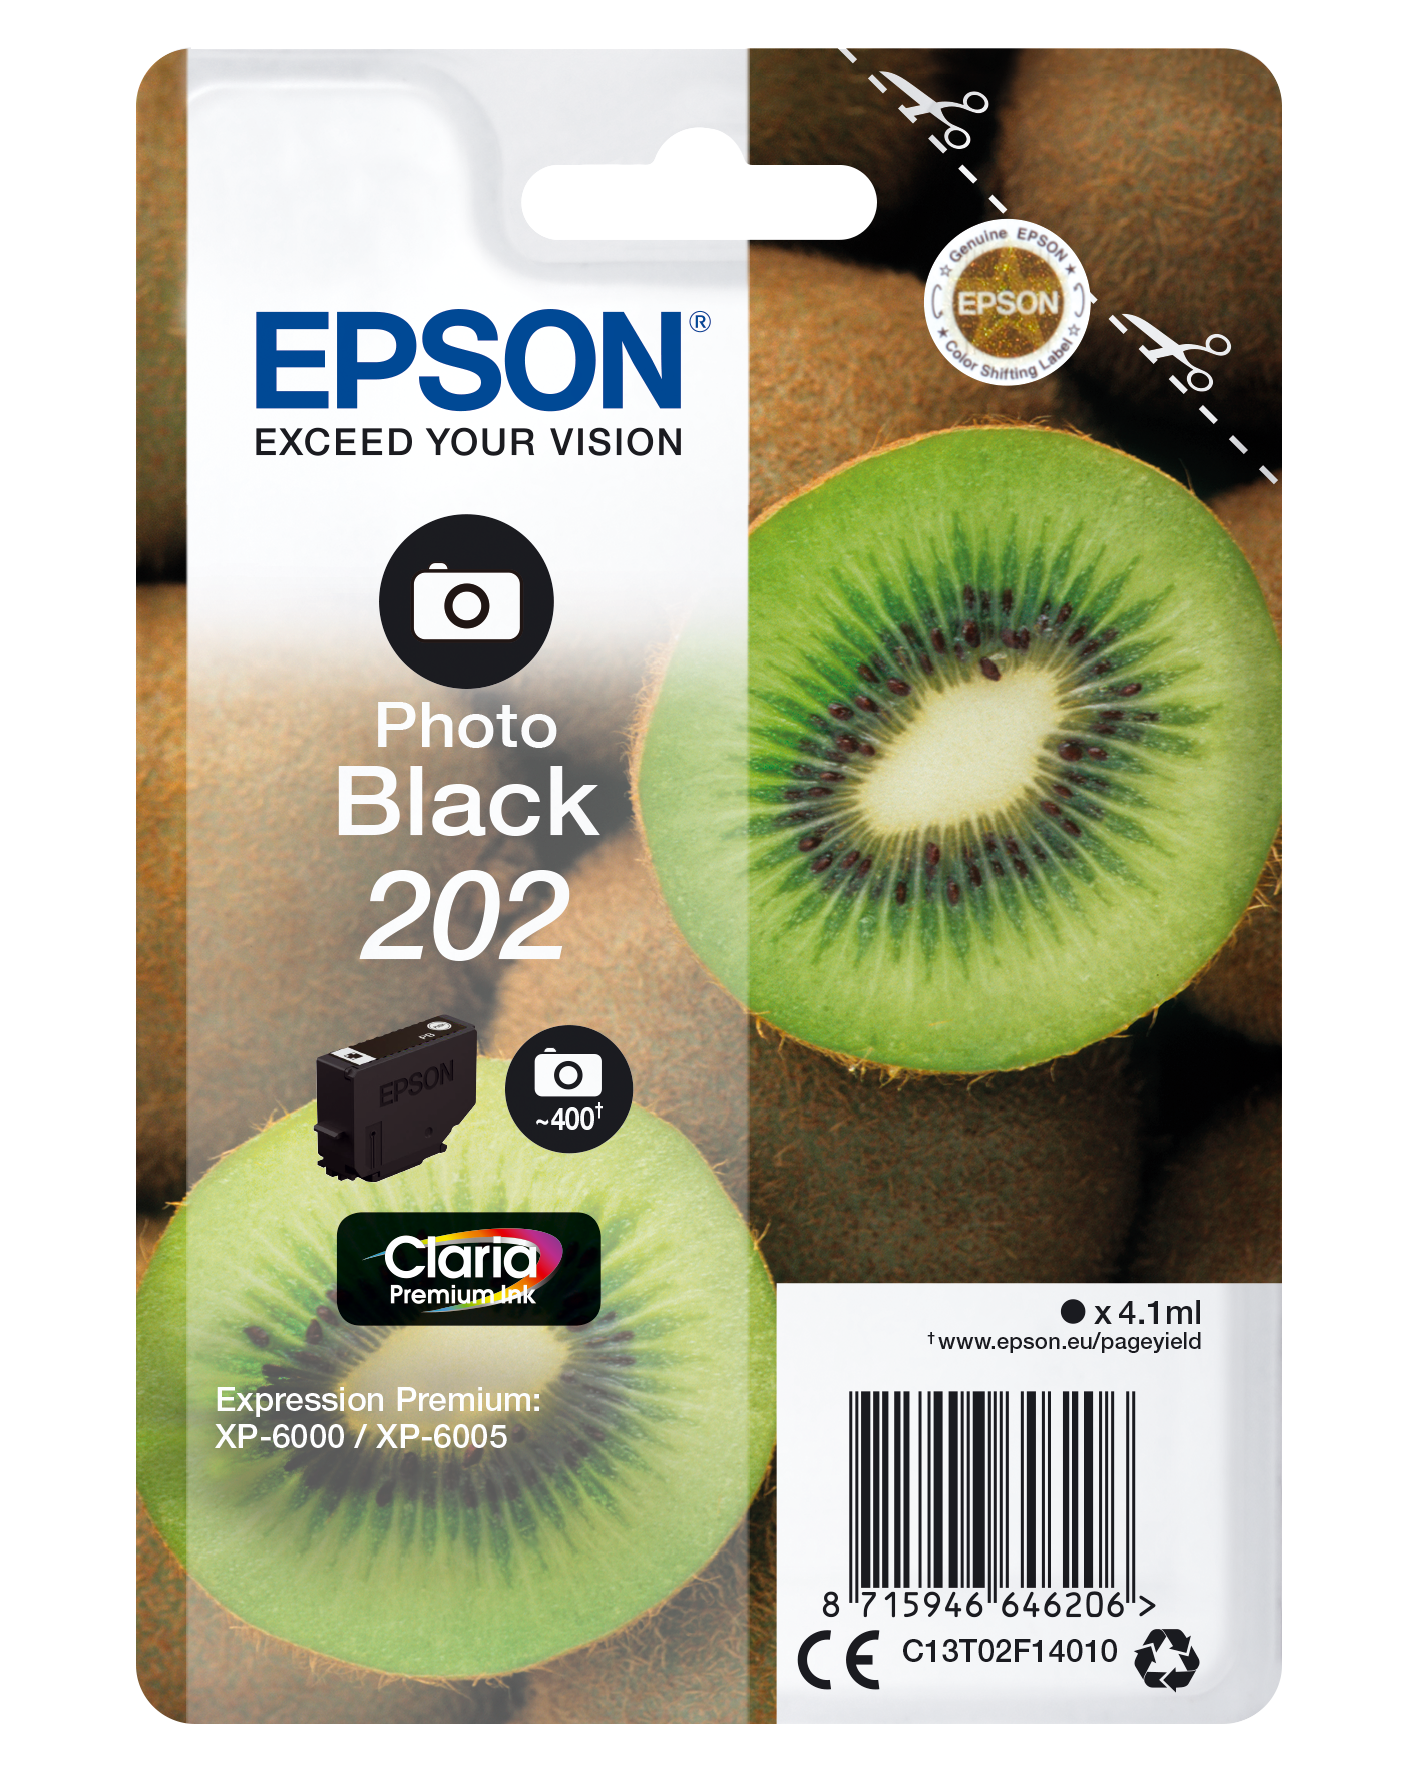 Epson Kiwi Singlepack Photo Black 202 Claria Premium Ink single pack / foto zwart